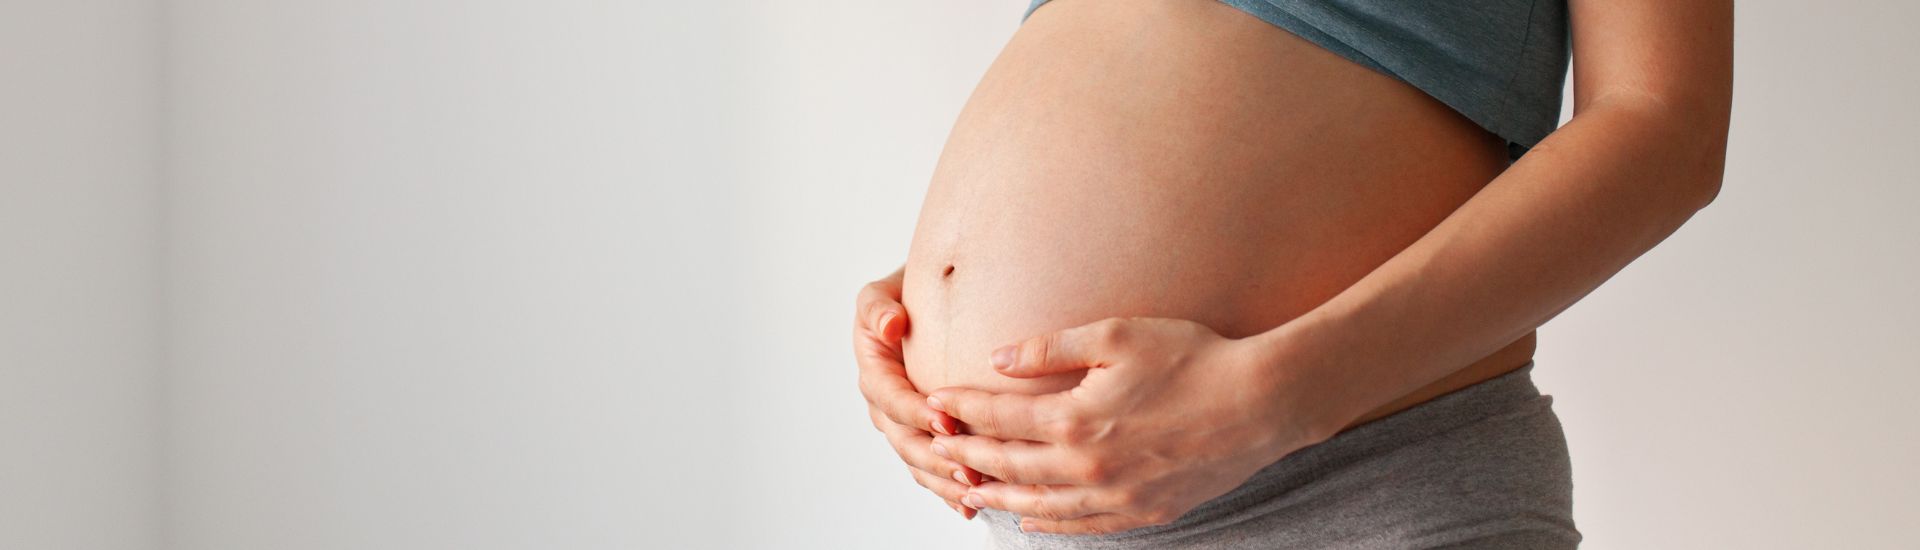 Prenatal Safe A-Medical Group di Arce